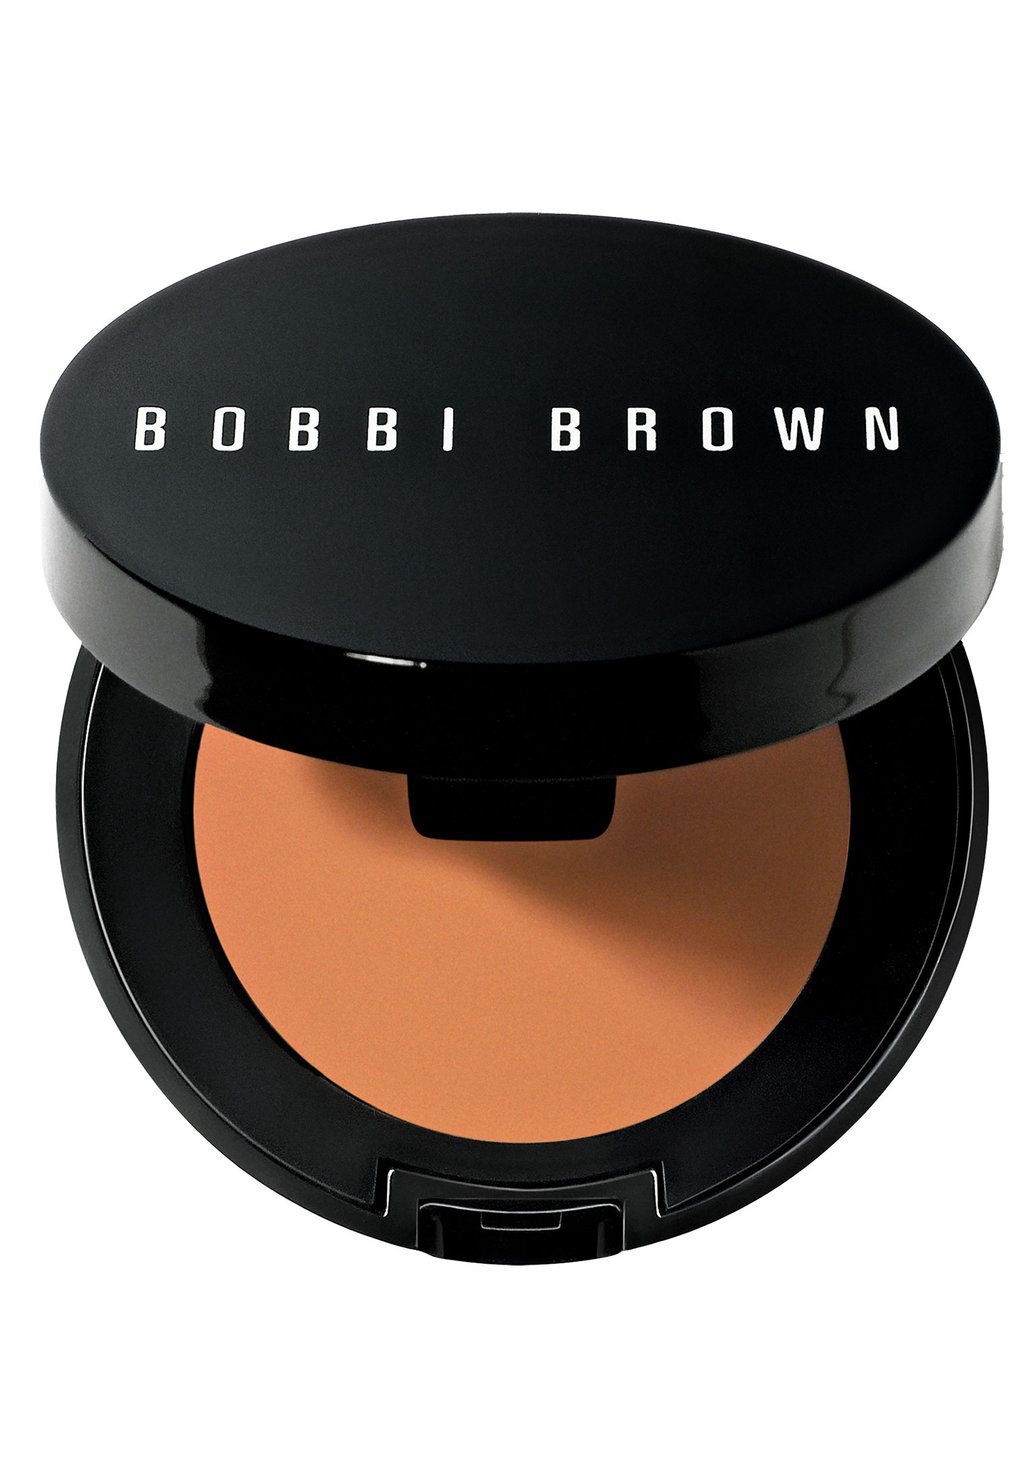 Консилер Corrector Bobbi Brown, цвет dark peach консилер corrector bobbi brown цвет light bisque